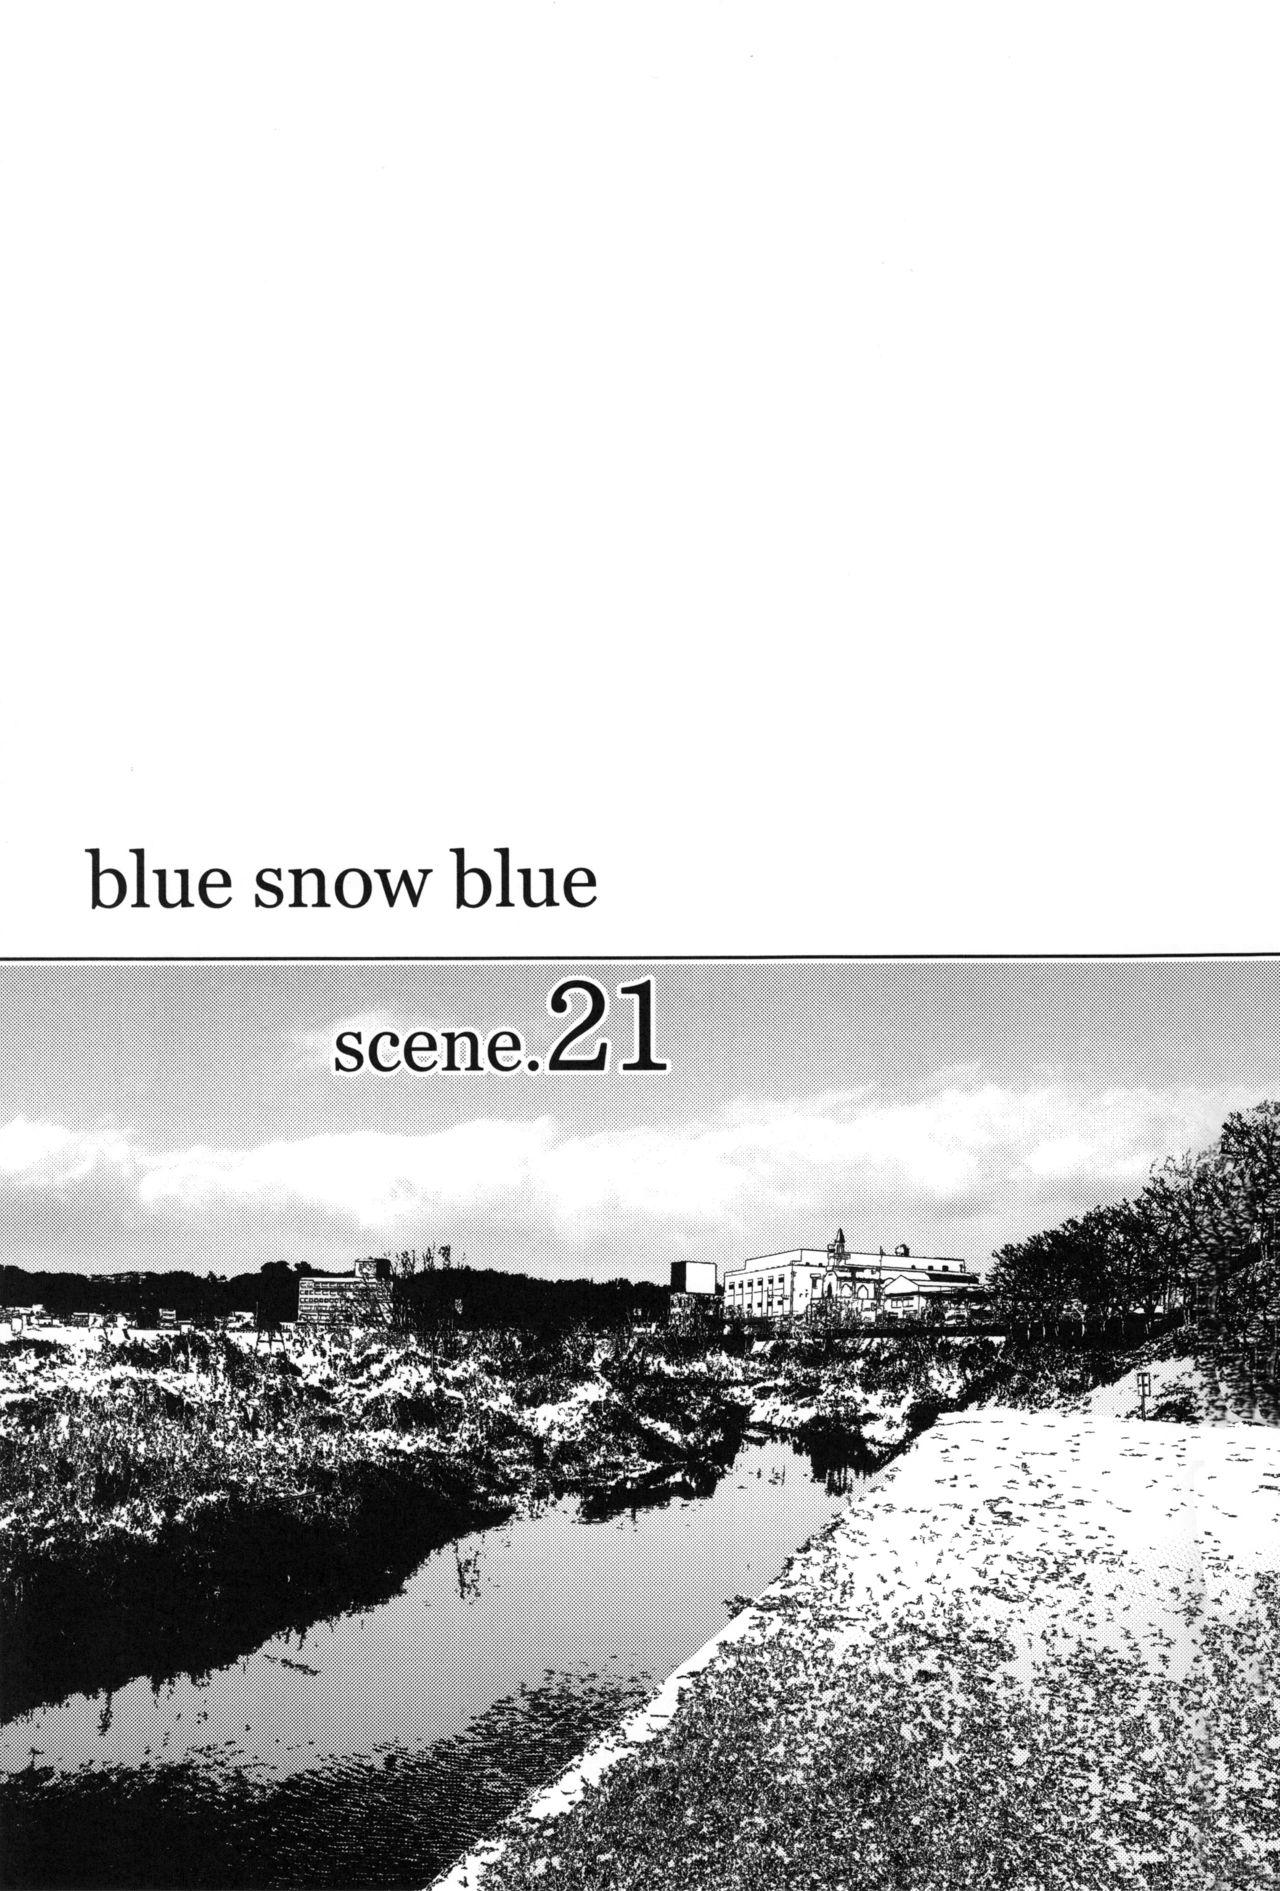 blue snow blue scene.21 1